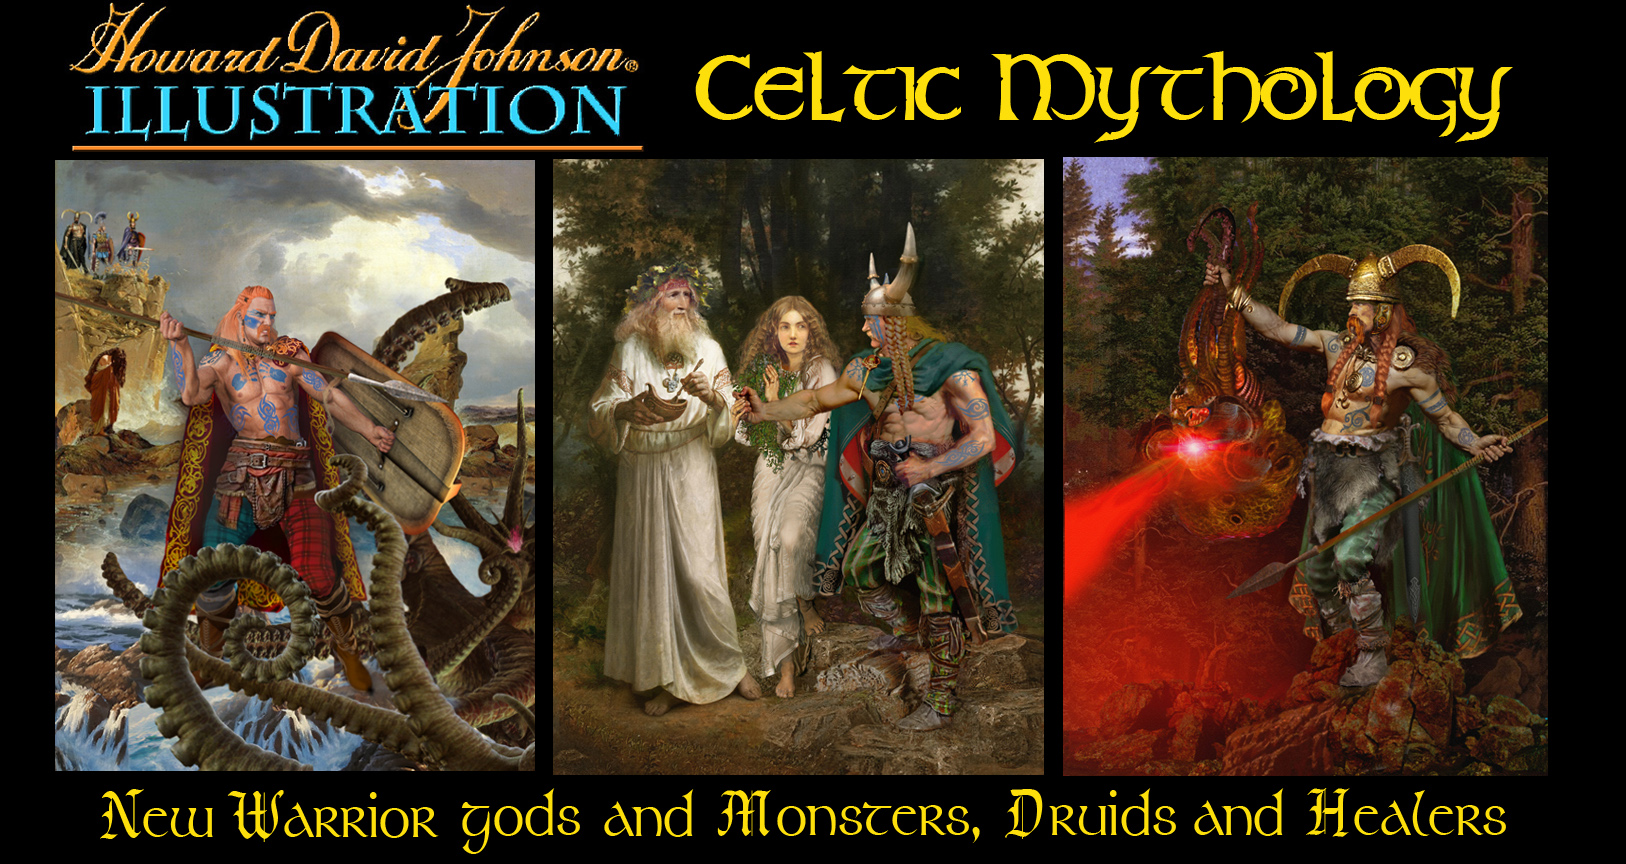 Howard David Johnson Celtic Mythology Irish art gallery link